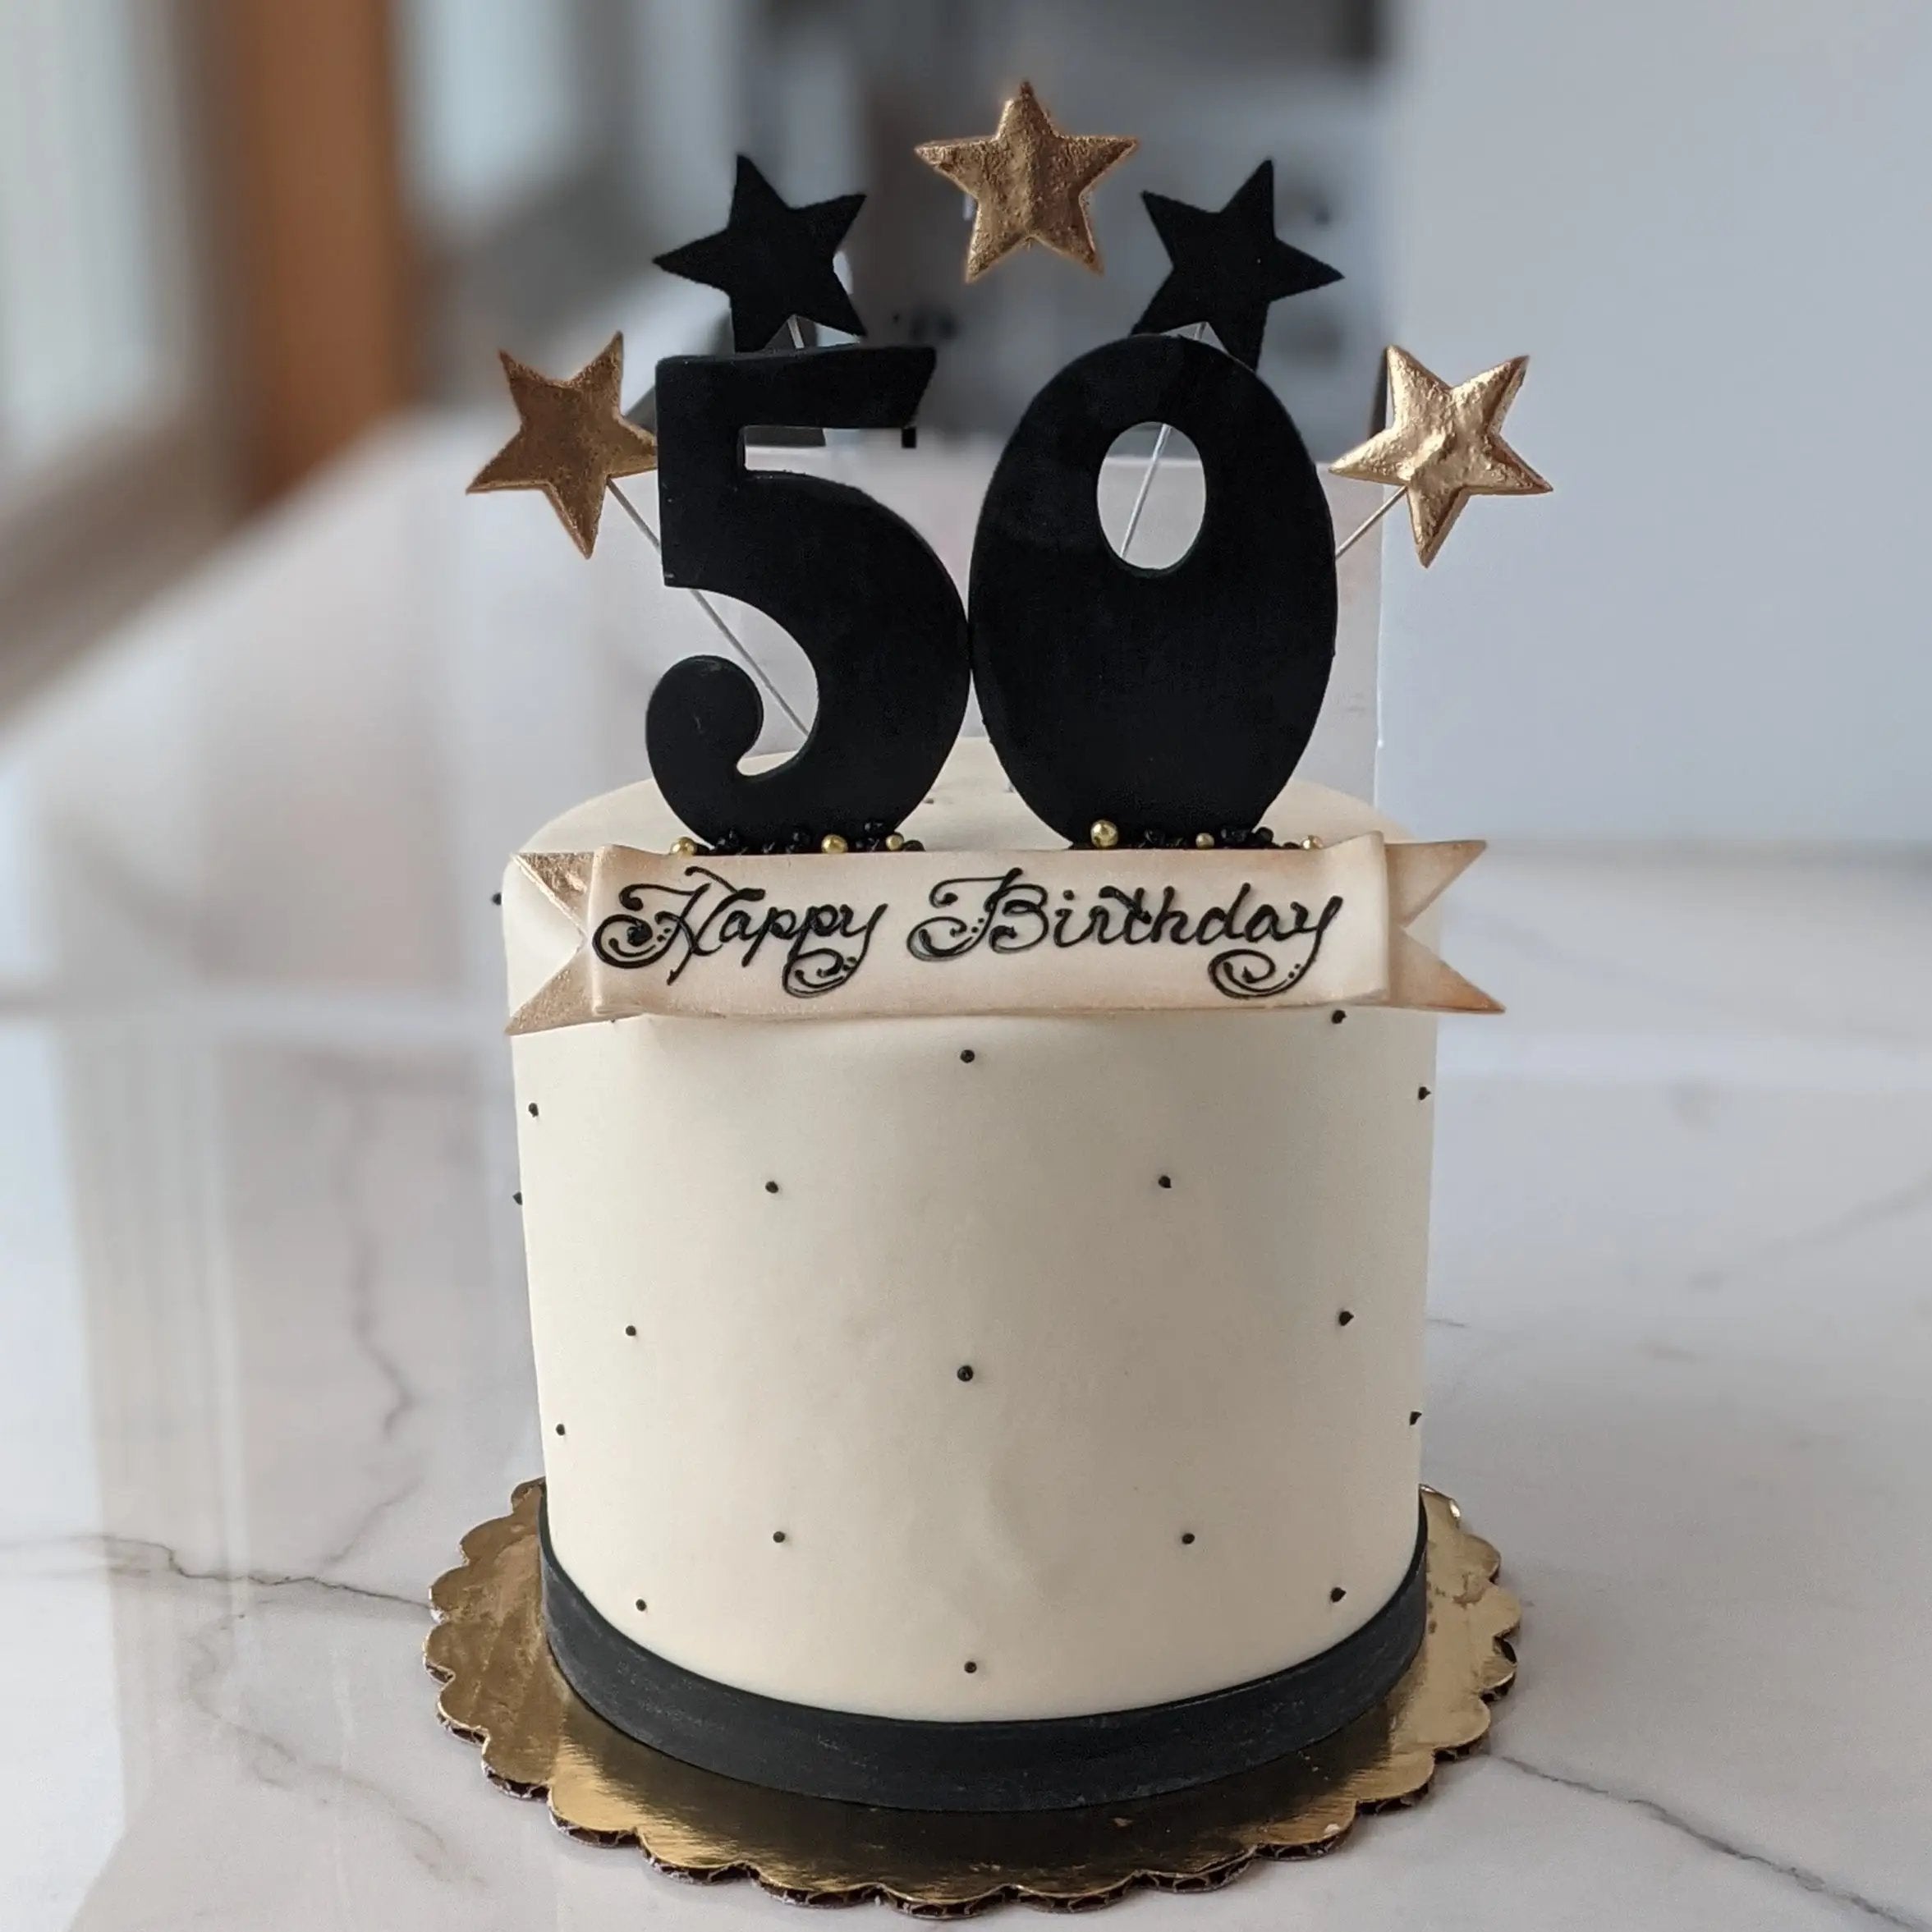 Order 50th Birthday Cake Today | Celebrity Cake Studio